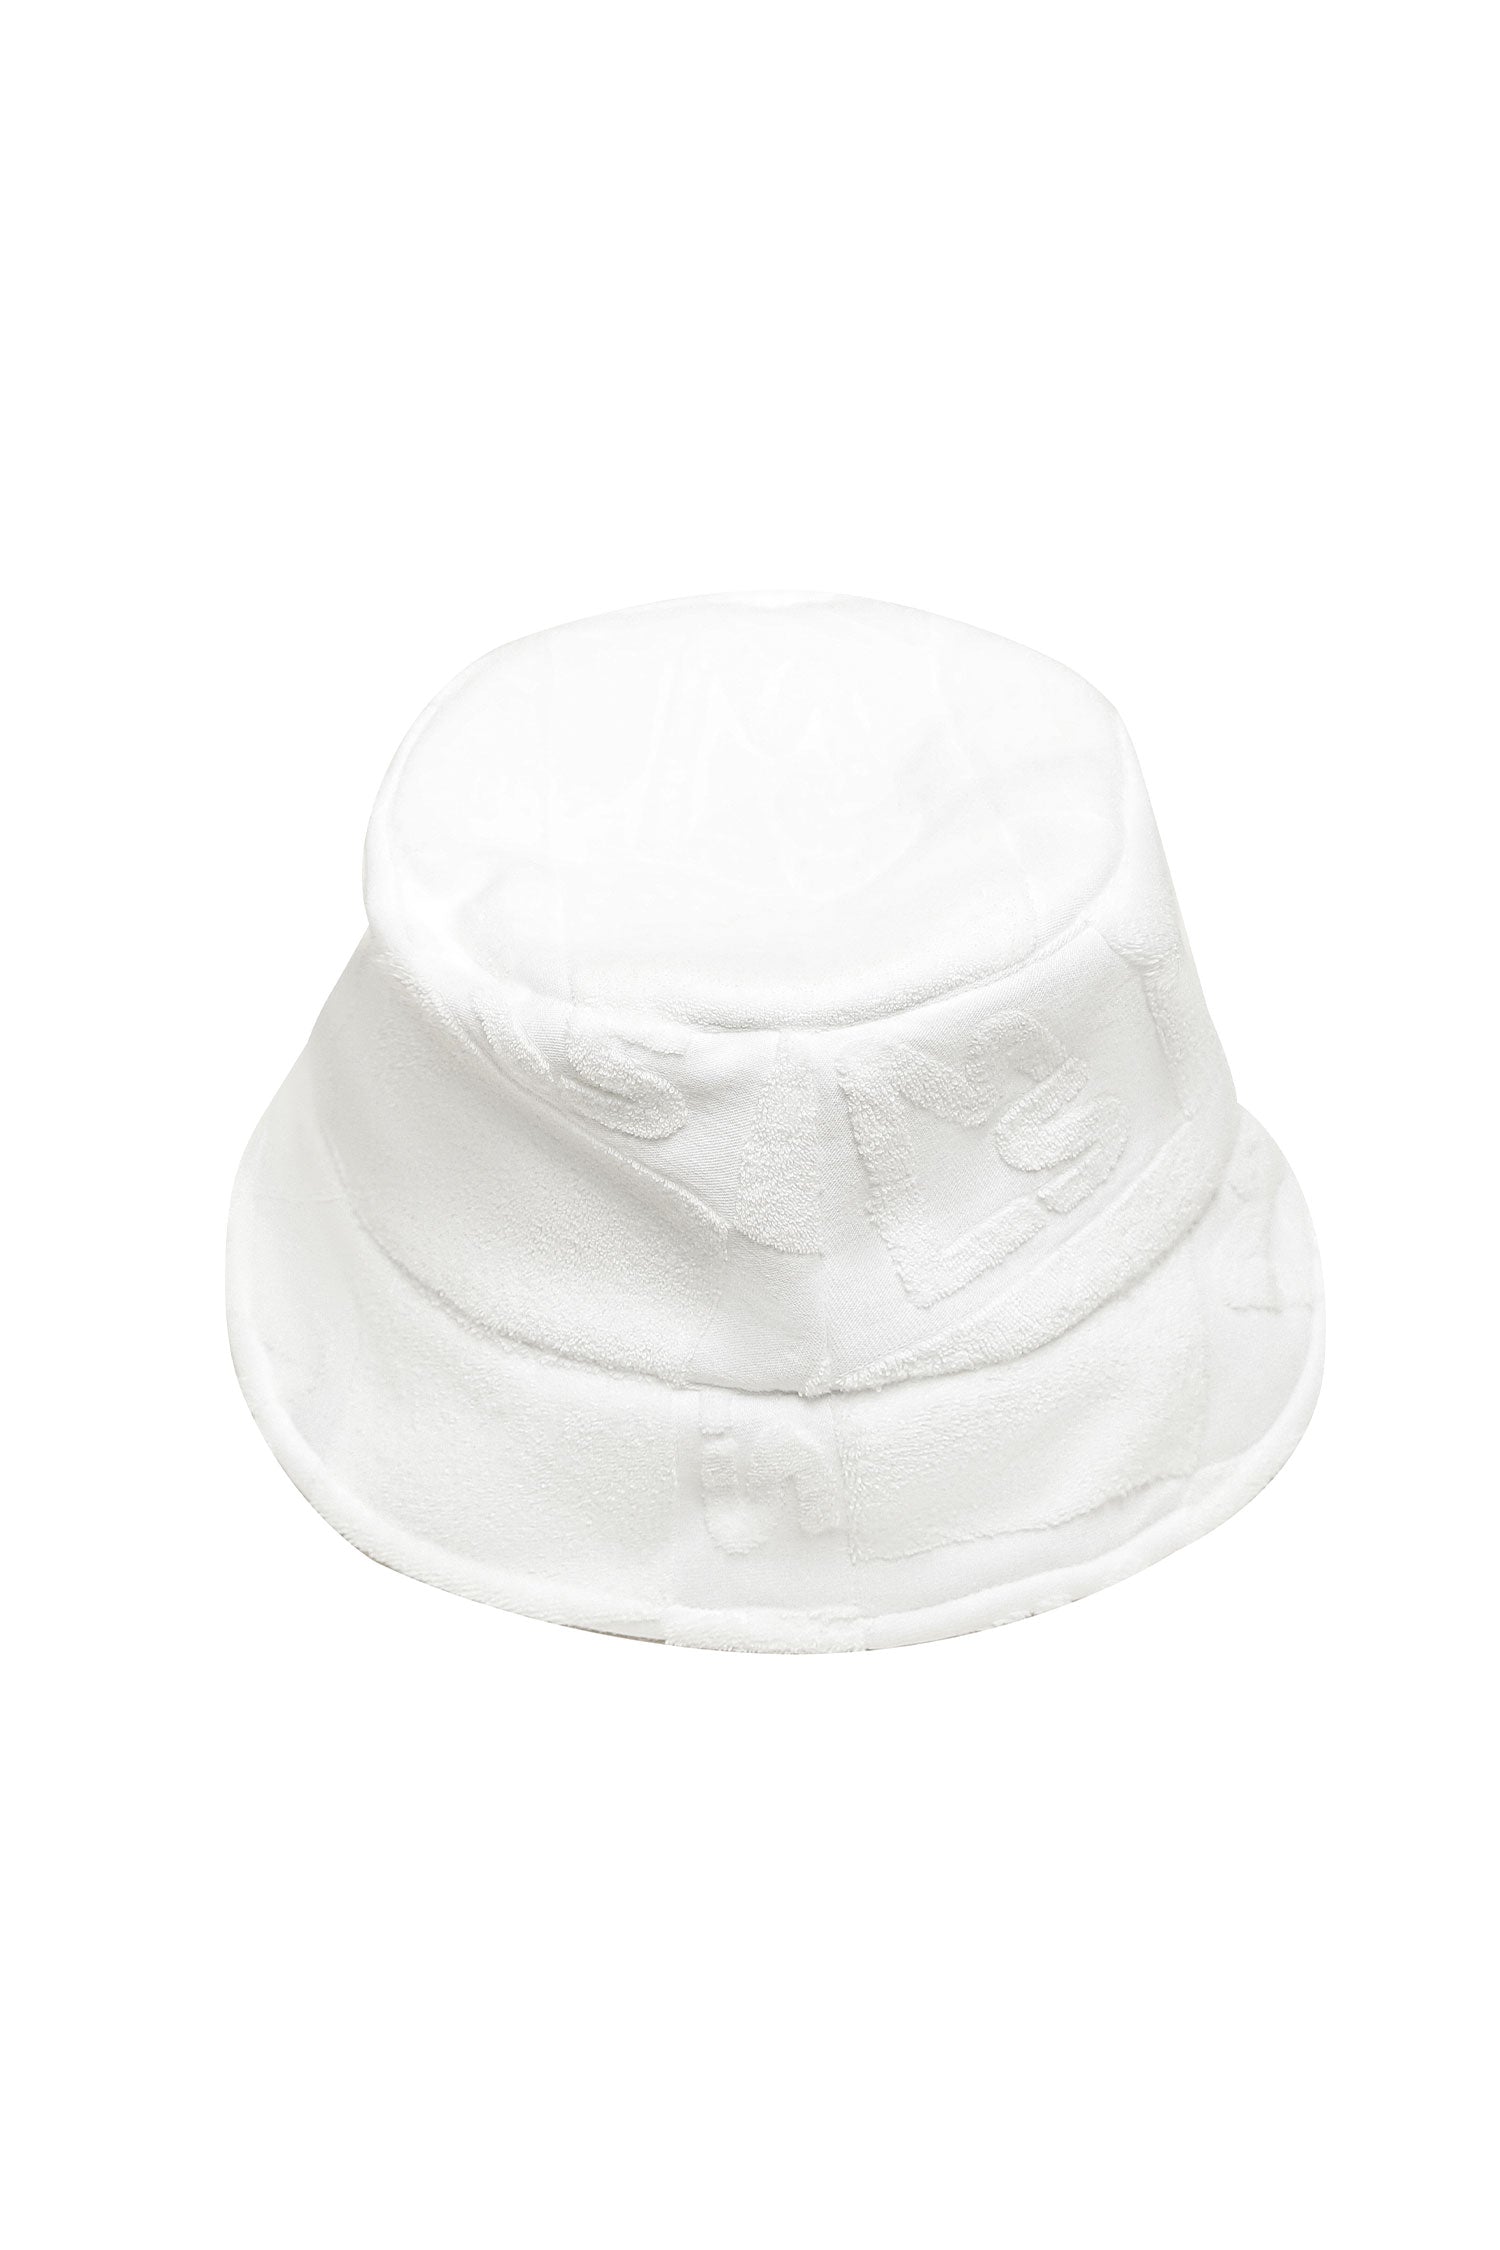 Oasis Toweling Bucket Hat